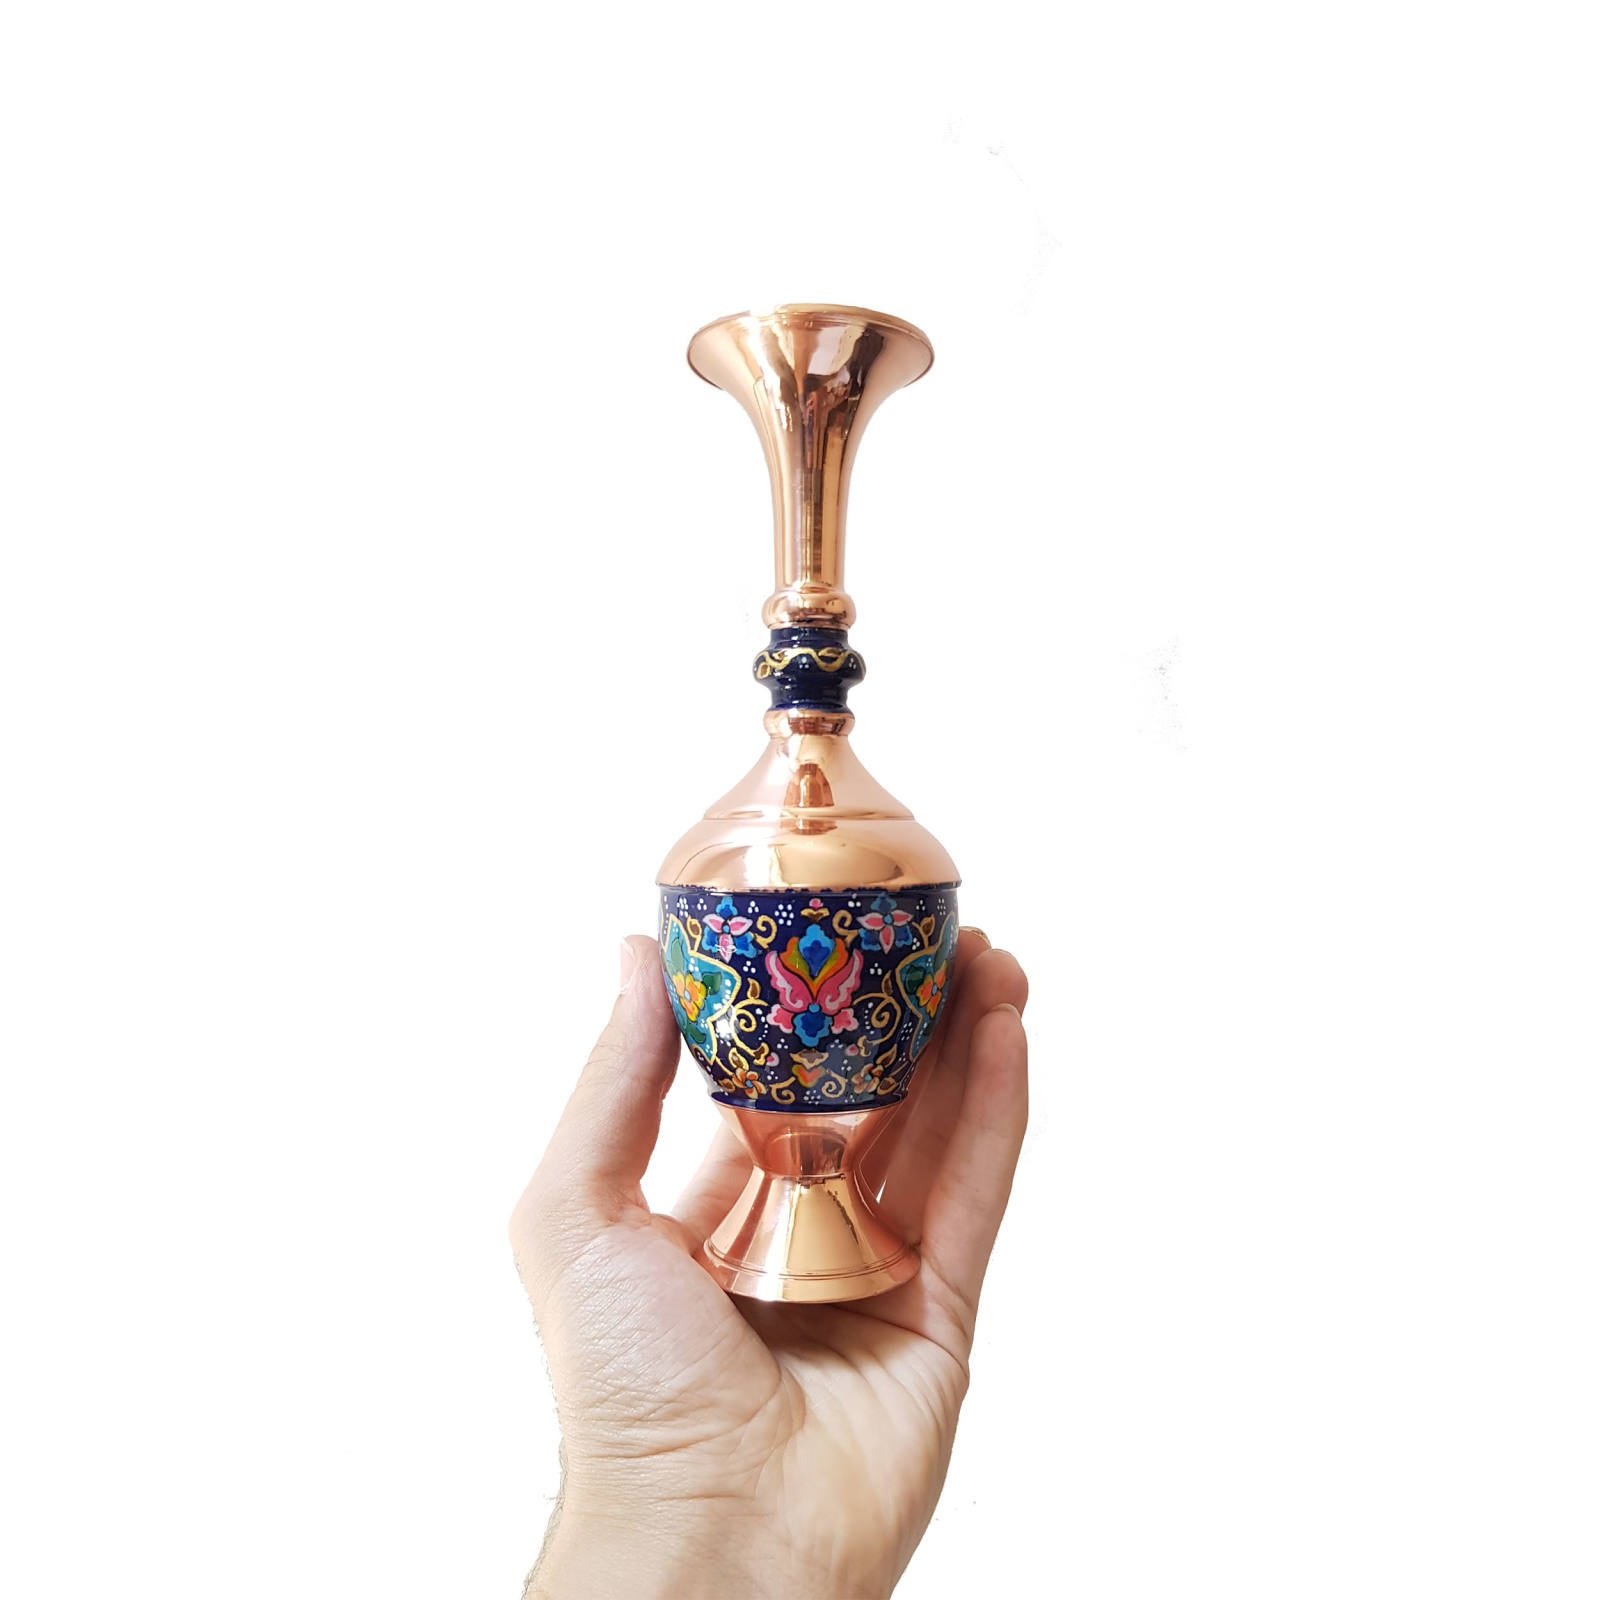 Enamel Handicraft Copper pot model naghashi pardaz Code 201, ollas hechas a mano, tarros hechos a mano, esmalte hecho a mano, esmalte azul hecho a mano